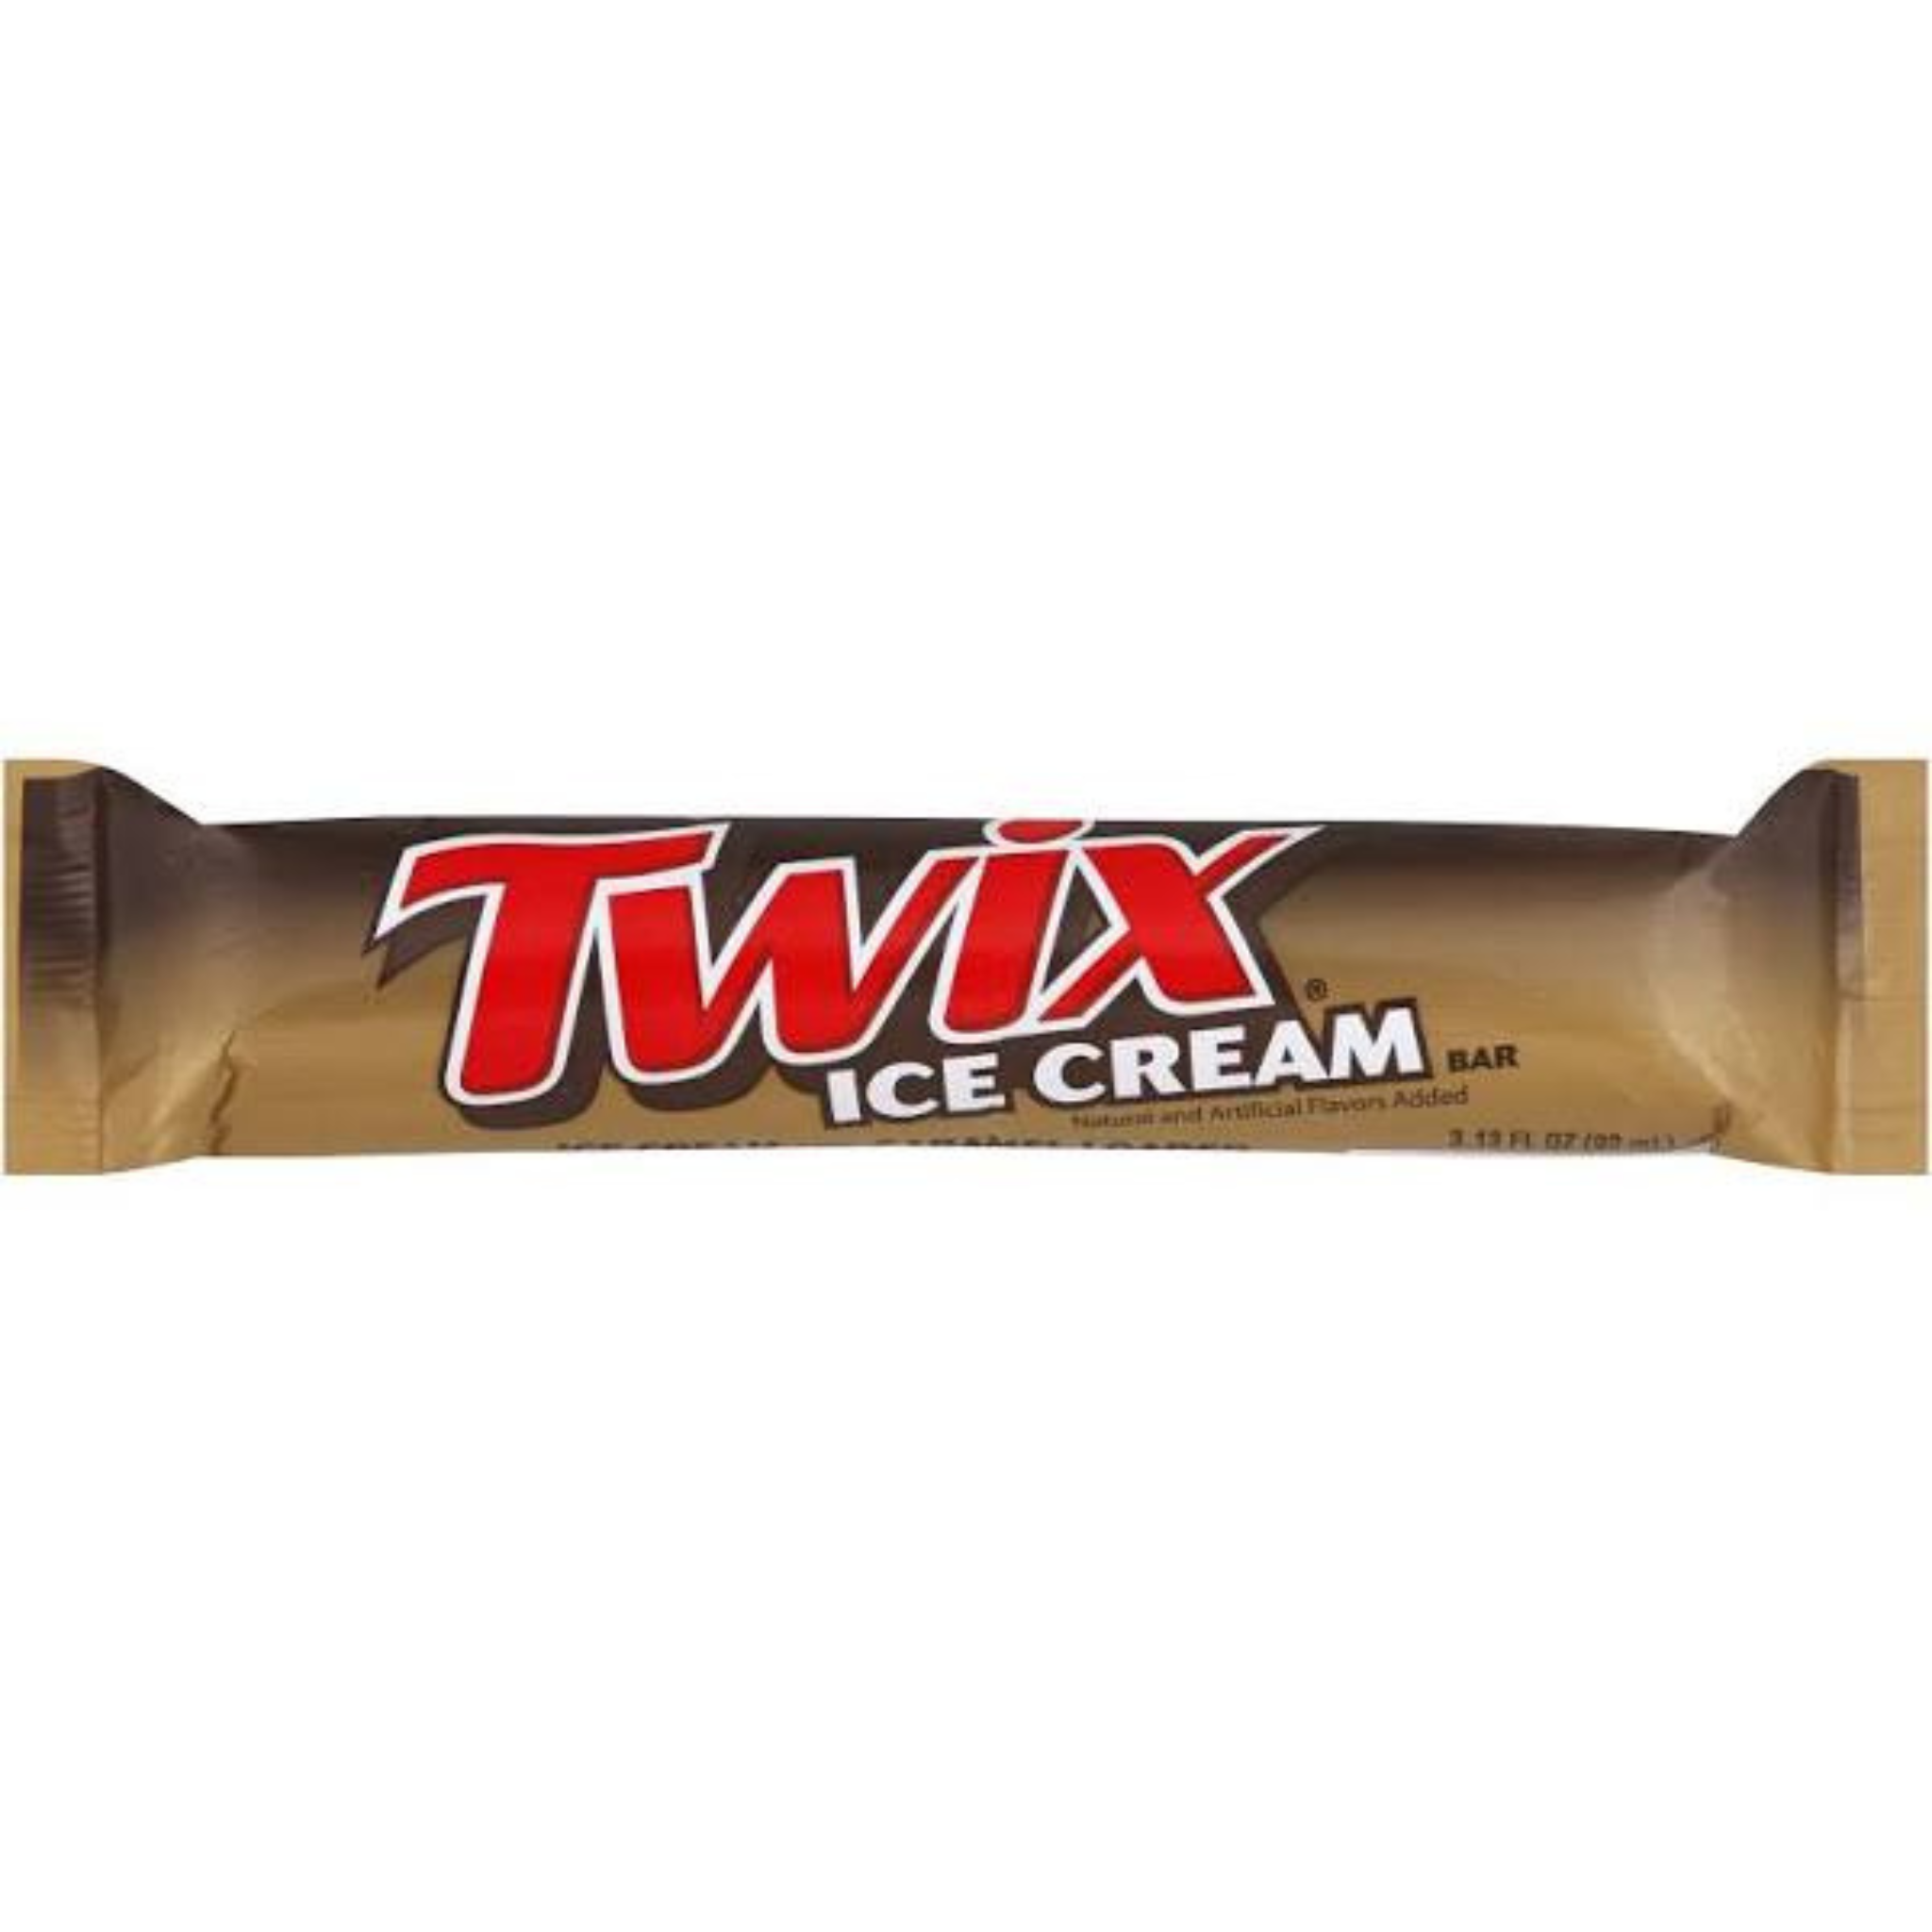 Twix Ice Cream Bar